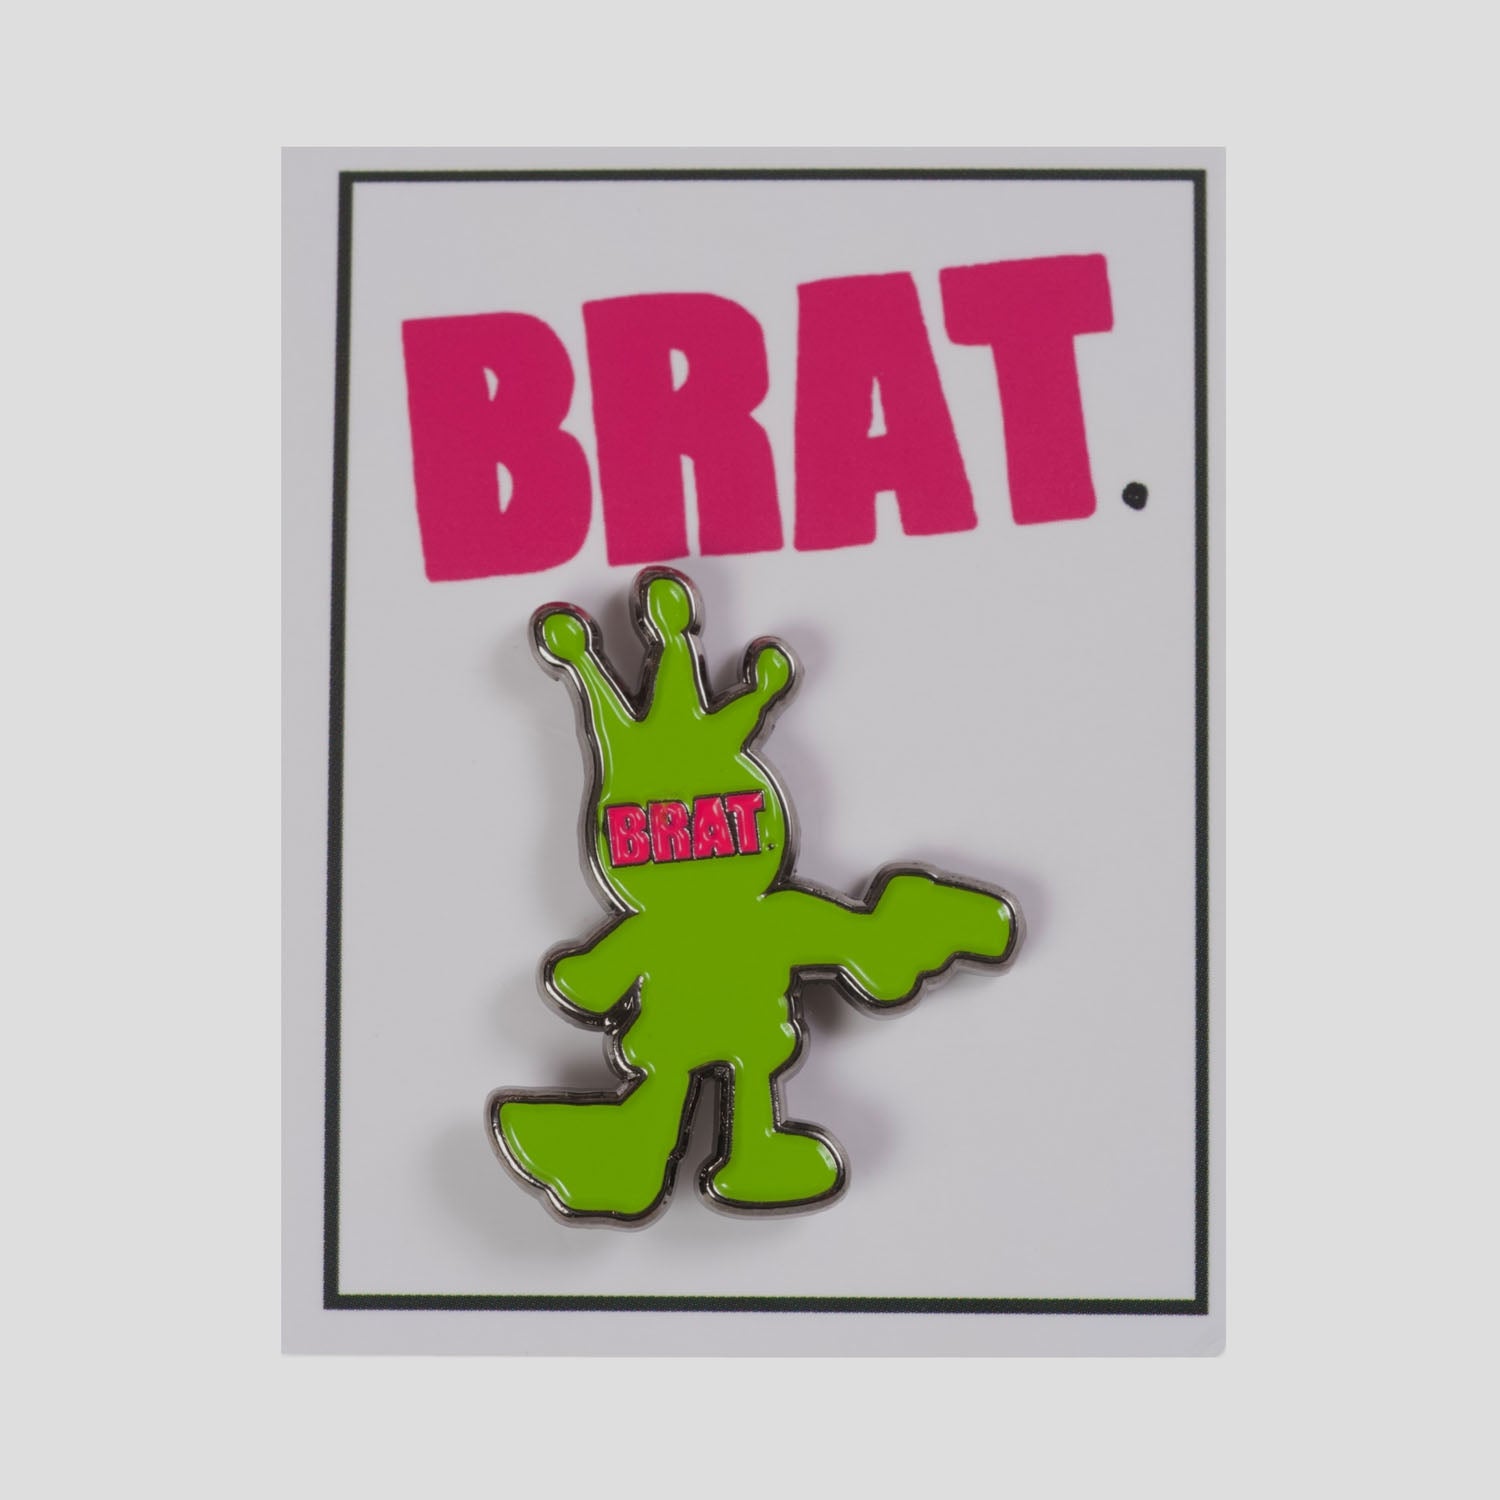 Carpet Company 'Brat Kid' Pin - Green